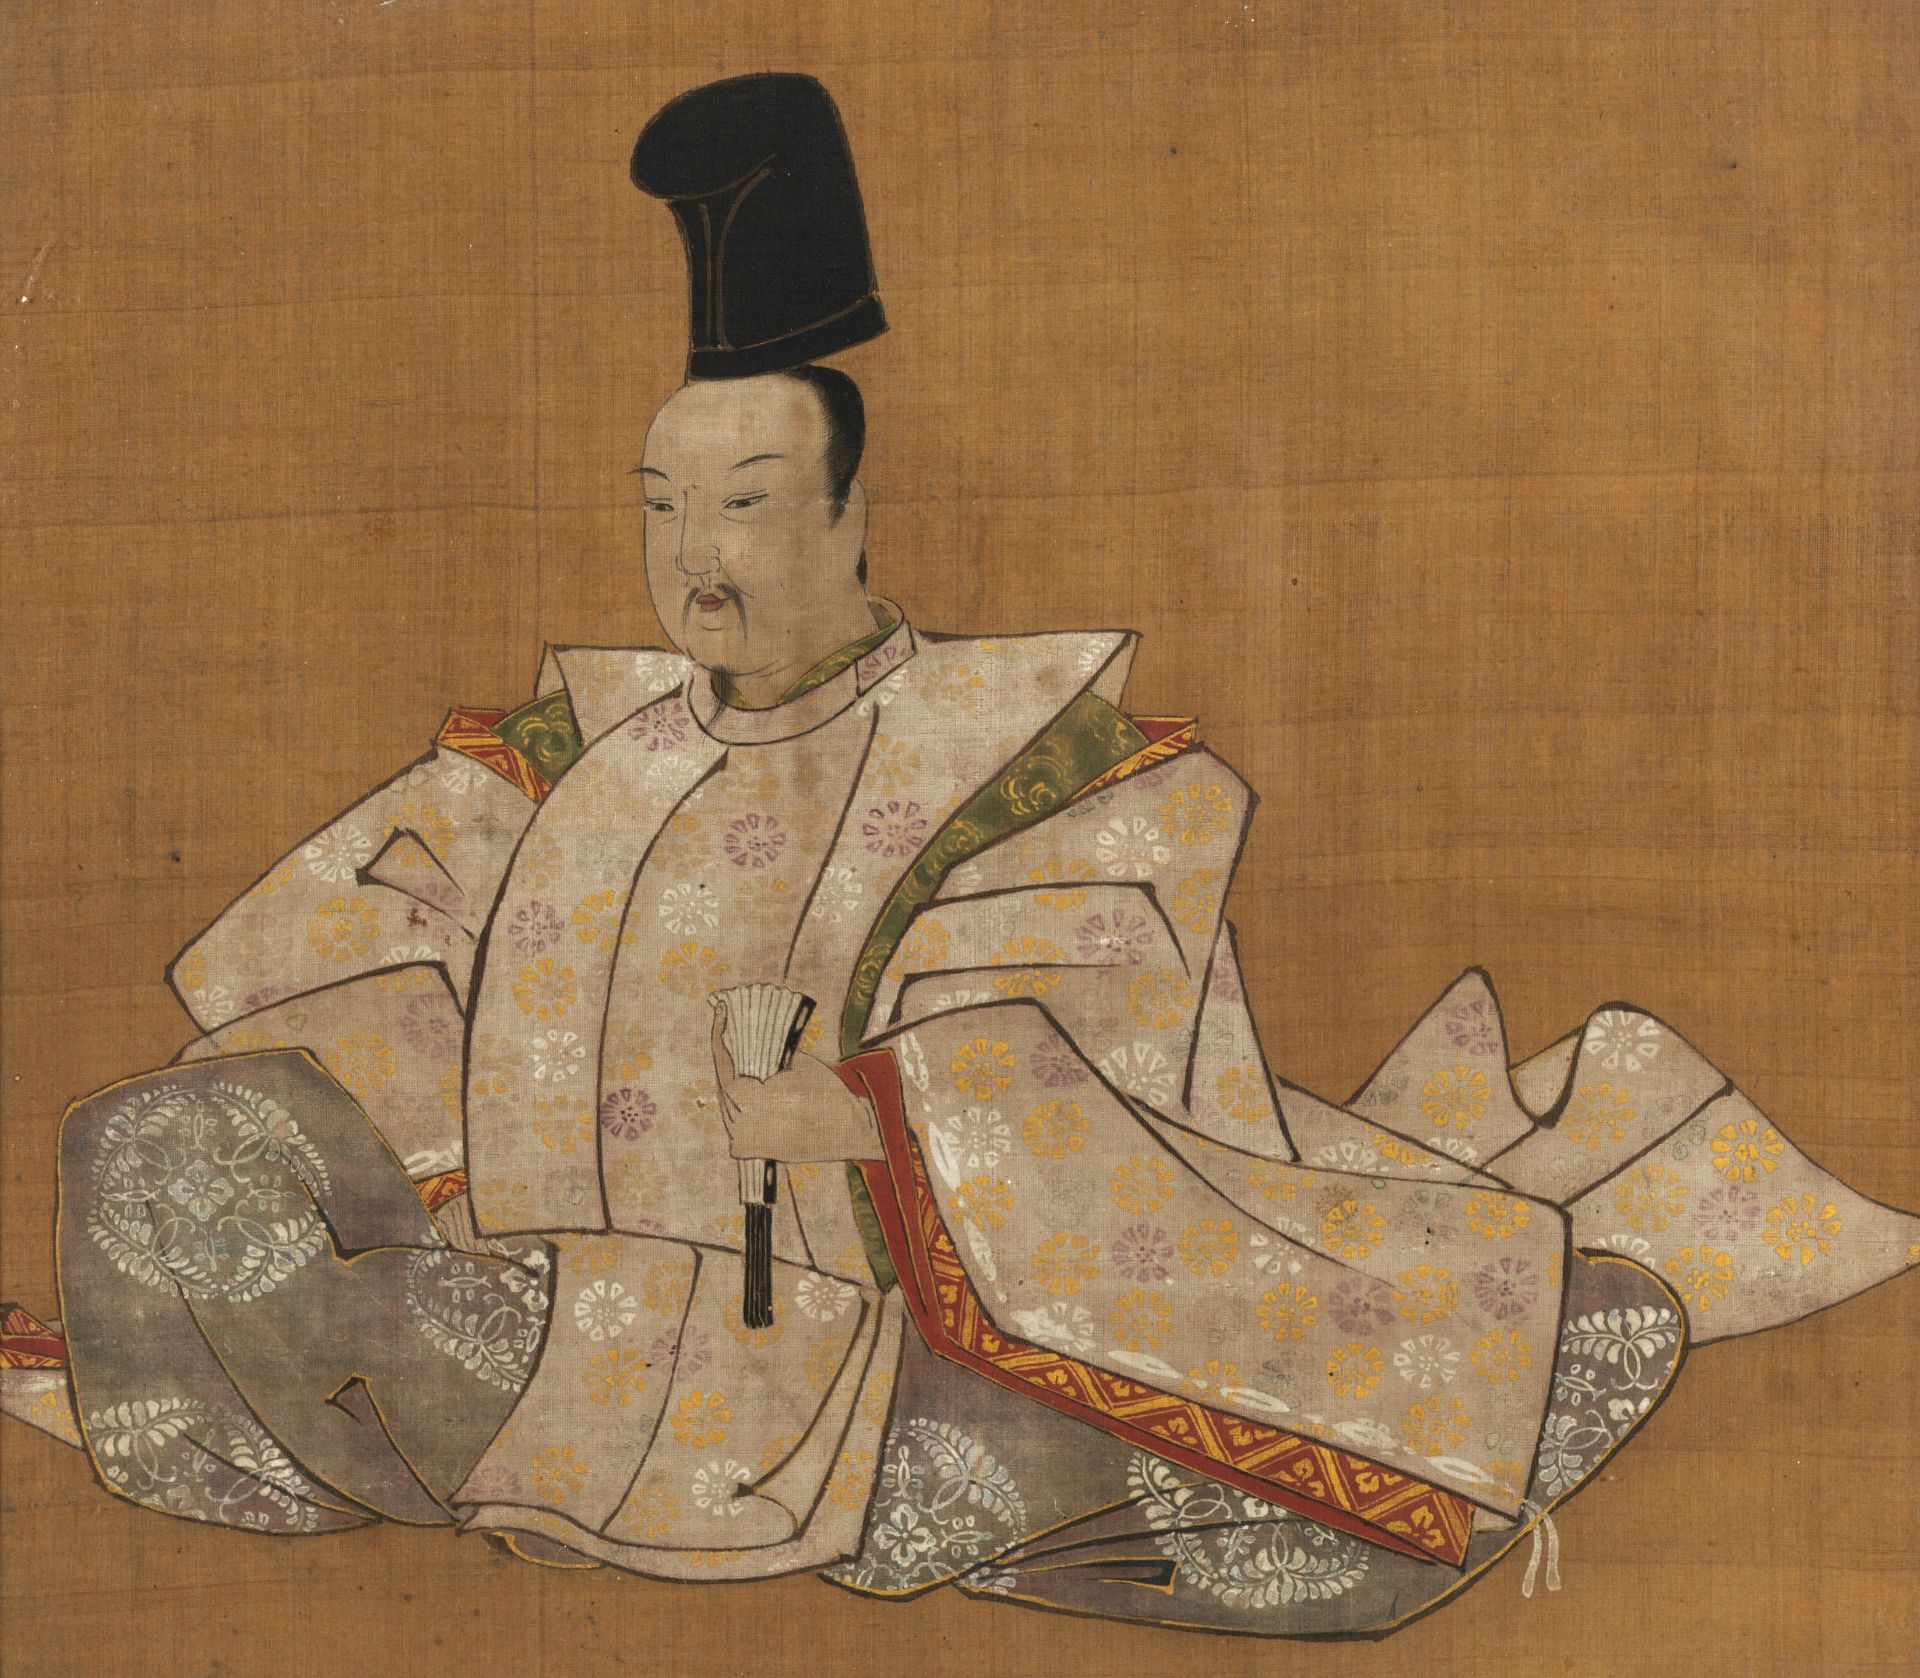 ANONYME Japon, &#233;poque Edo (1615-1868), probablement XVIIIe si&#232;cle